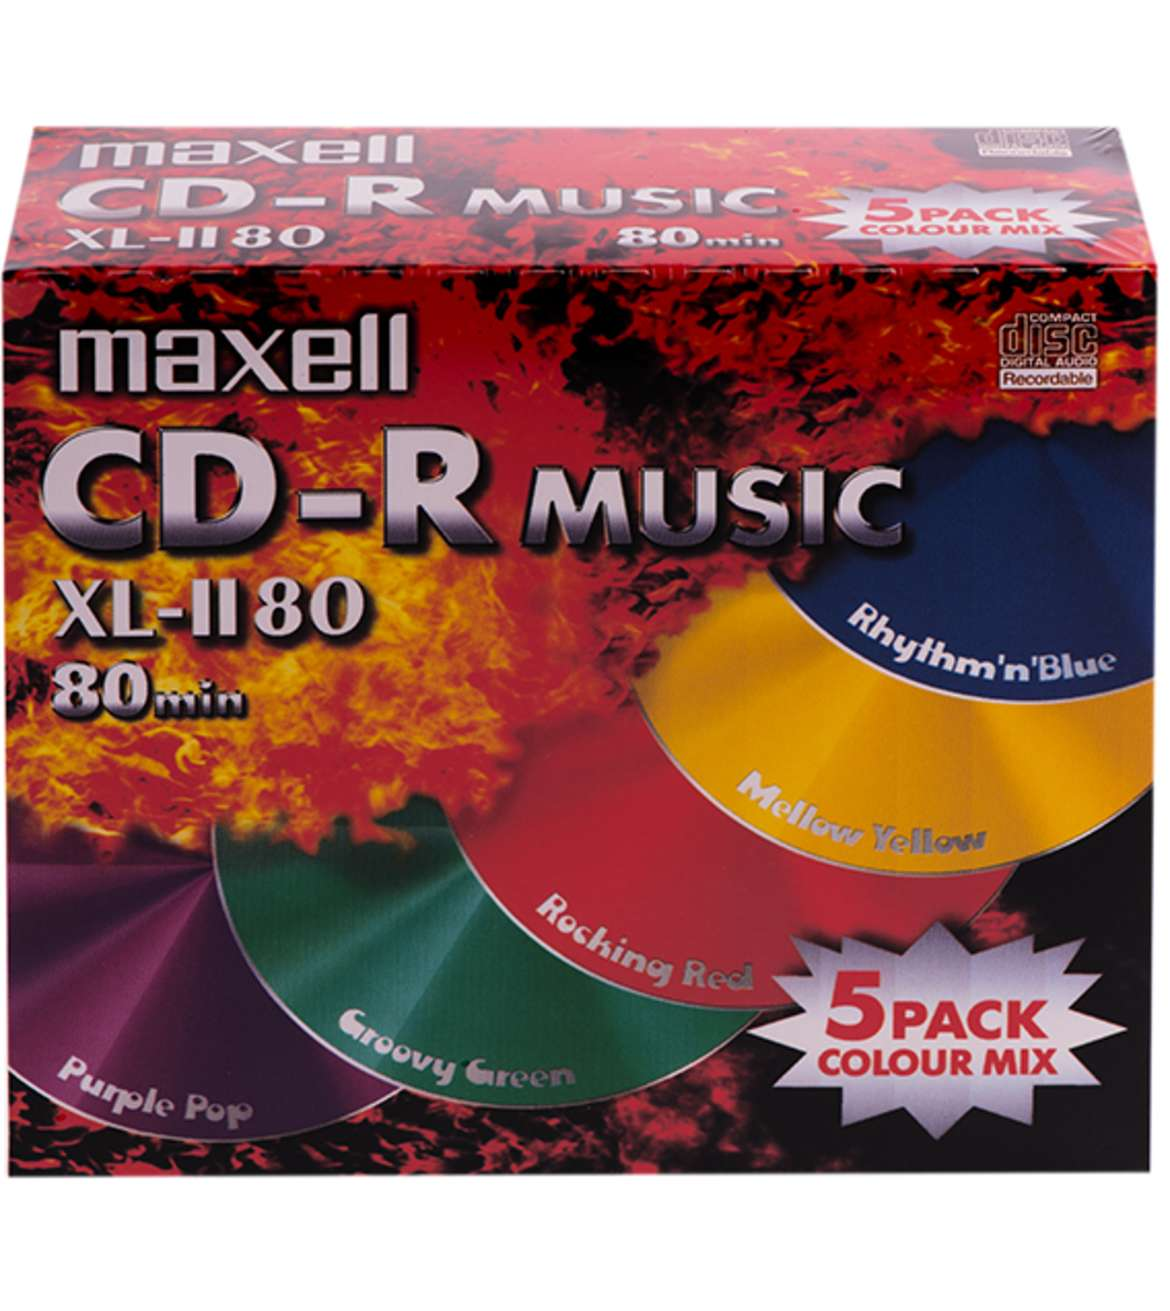 MAXELL CD-R 80 52X MU II COLOR